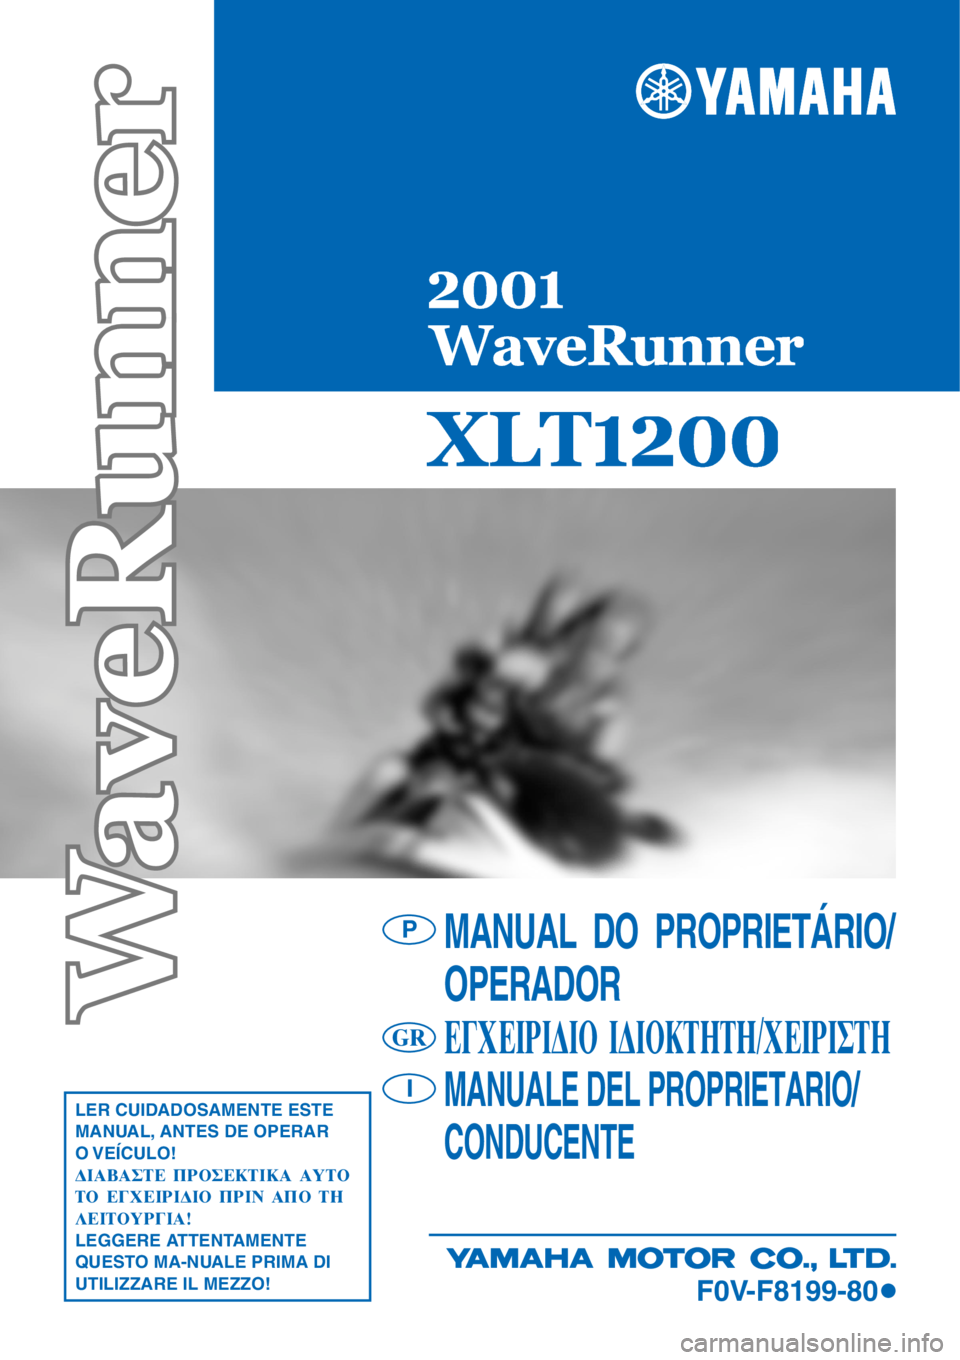 YAMAHA XL 1200 2001  Manual de utilização (in Portuguese) 

MANUAL  DO  PROPRIETÁRIO/
OPERADOR
∂°Ã∂πƒπ¢π√ π¢π√∫∆∏∆∏/Ã∂πƒπ™∆∏
MANUALE DEL PROPRIETARIO/
CONDUCENTELER CUIDADOSAMENTE ESTE
MANUAL, ANTES DE OPER